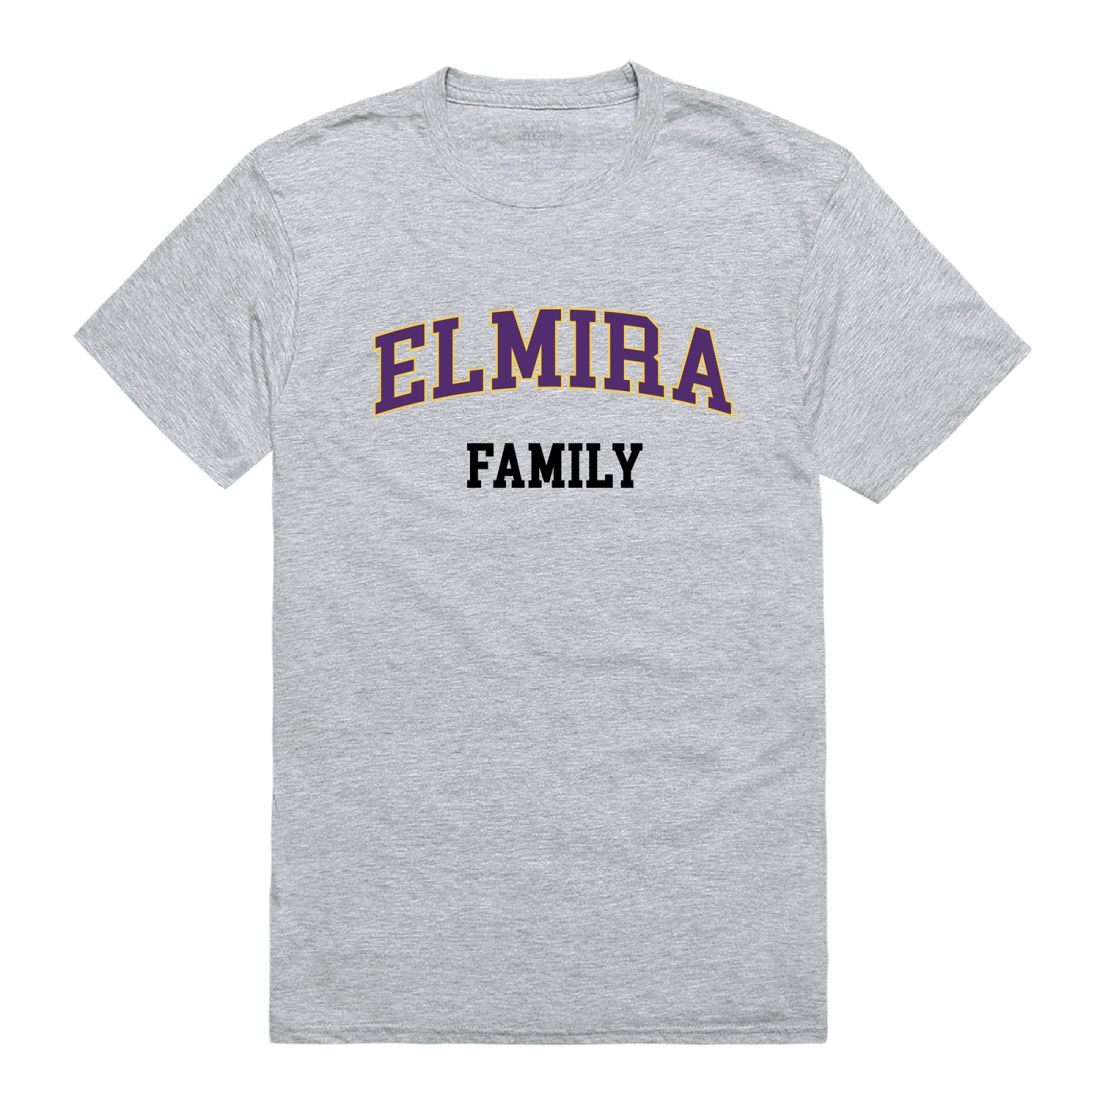 Elmira College Soaring Eagles Family T-Shirt